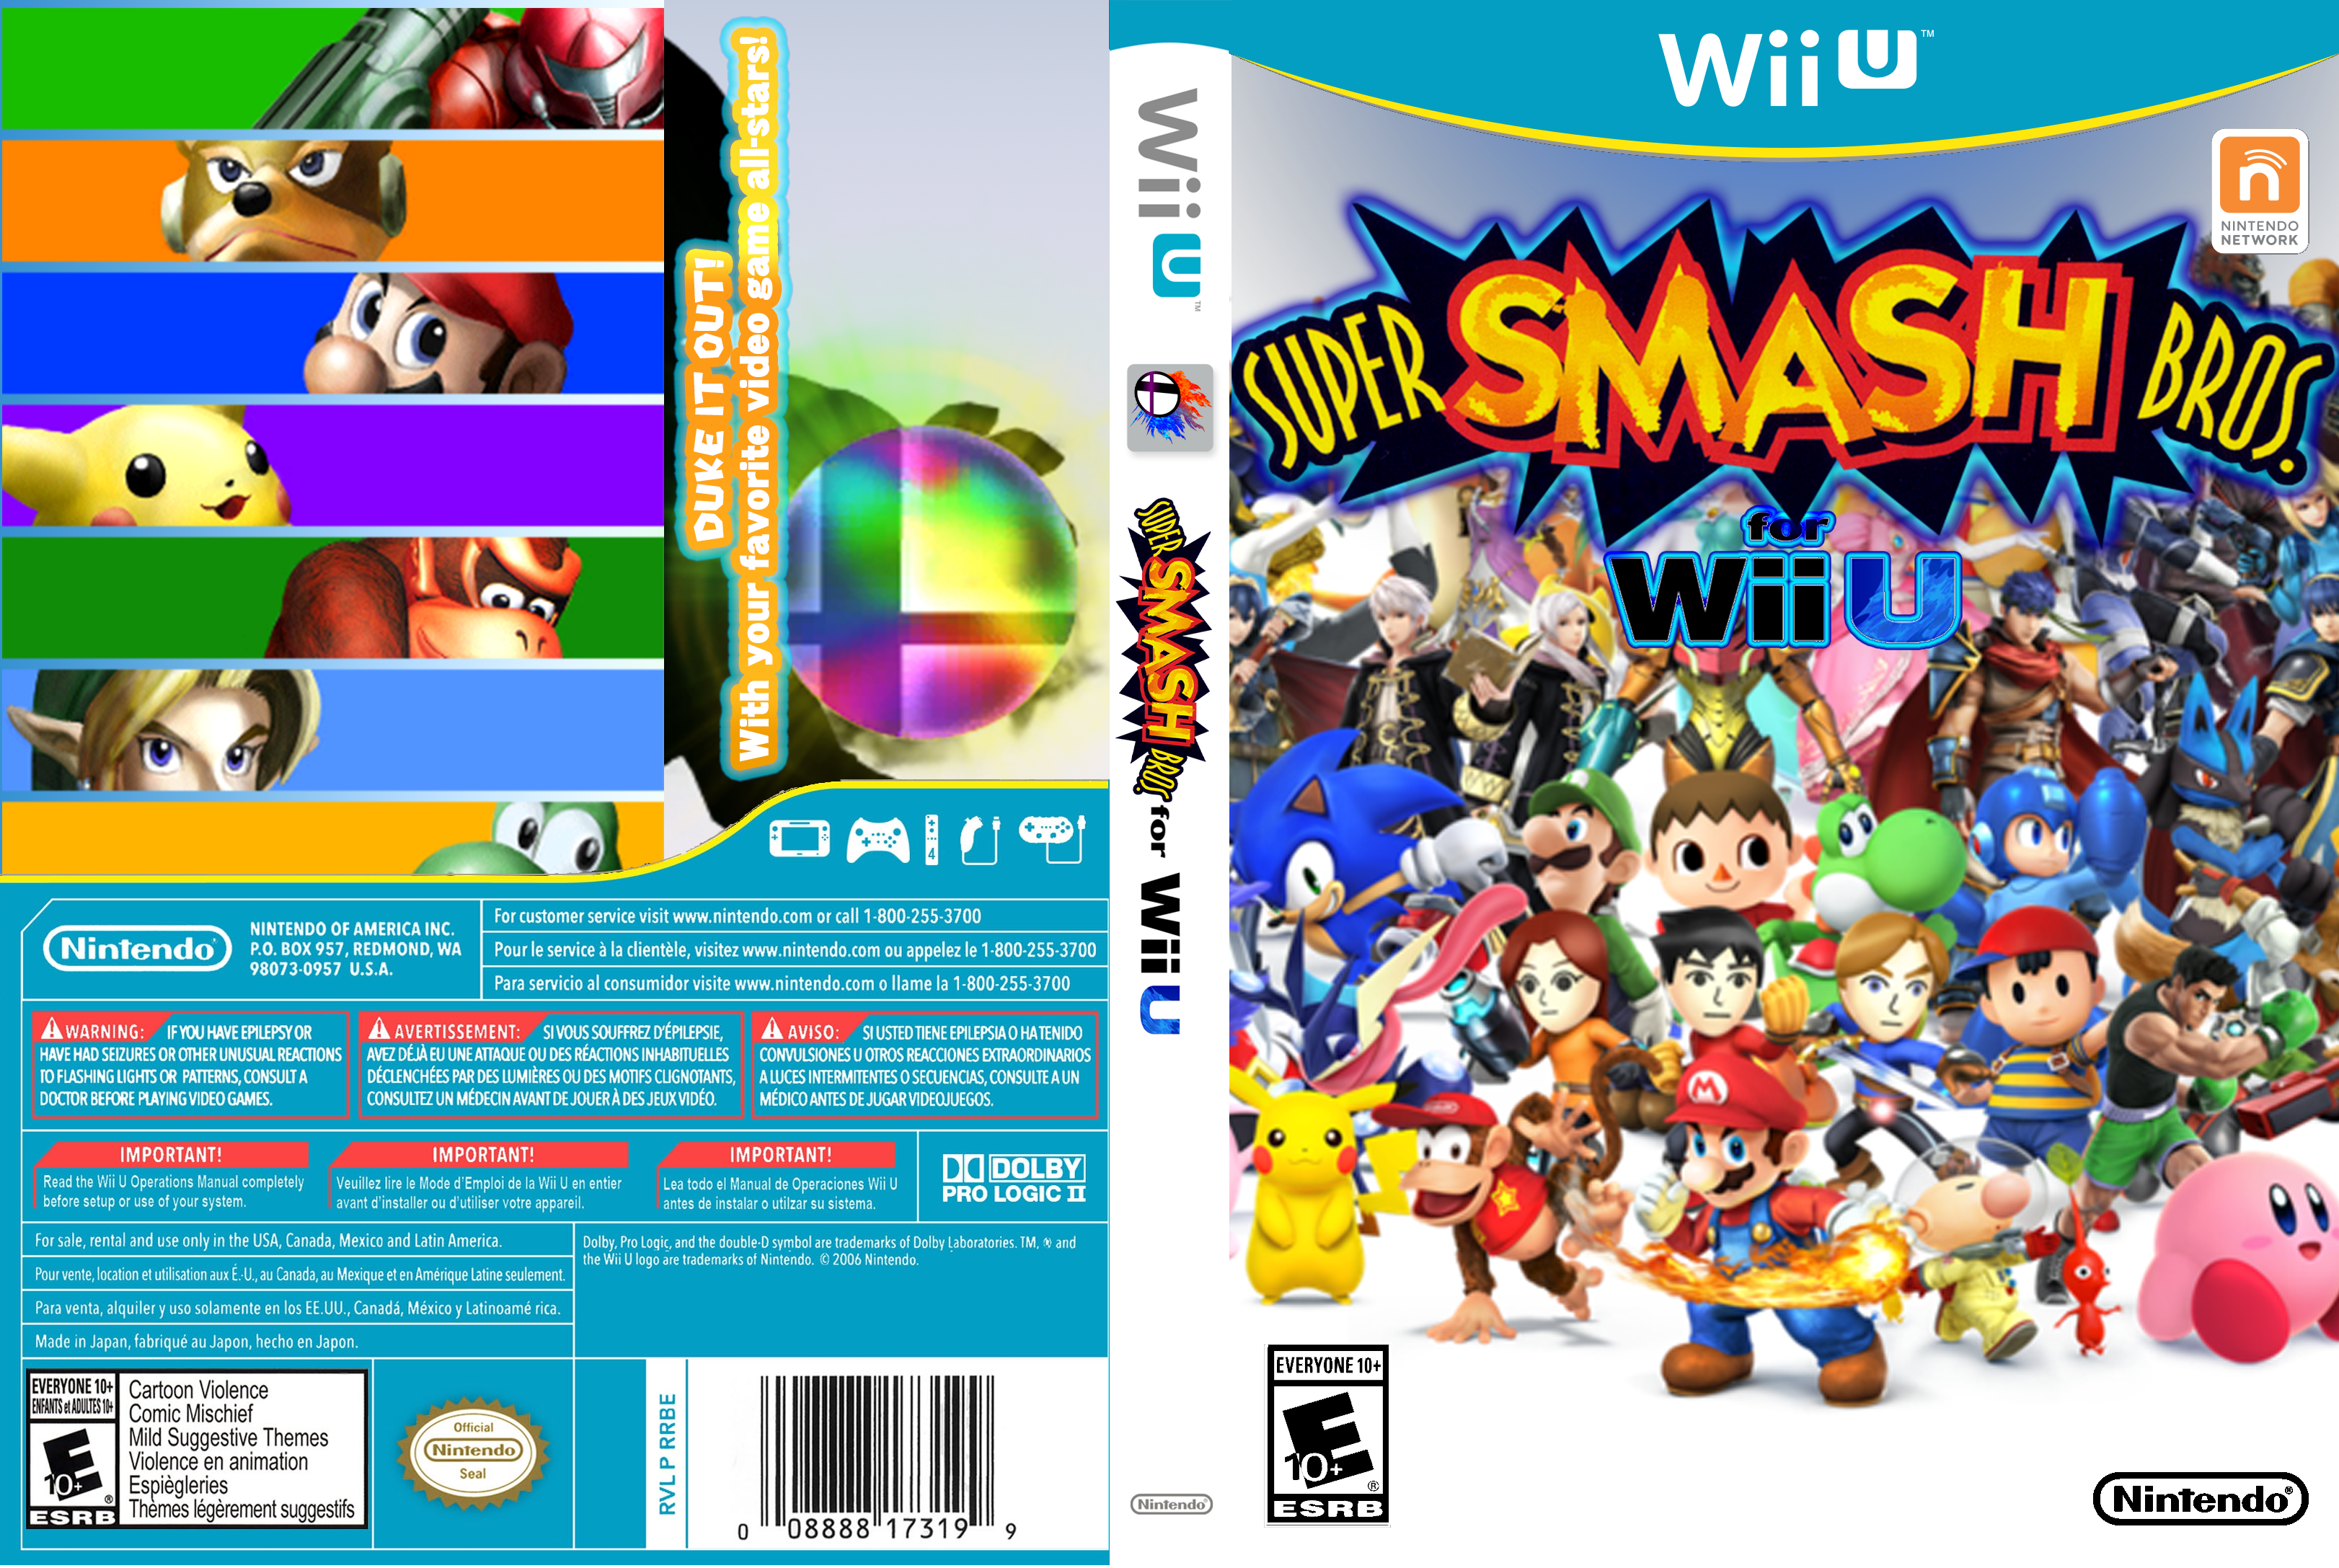 Custom Super Smash Bros. Wii U box cover